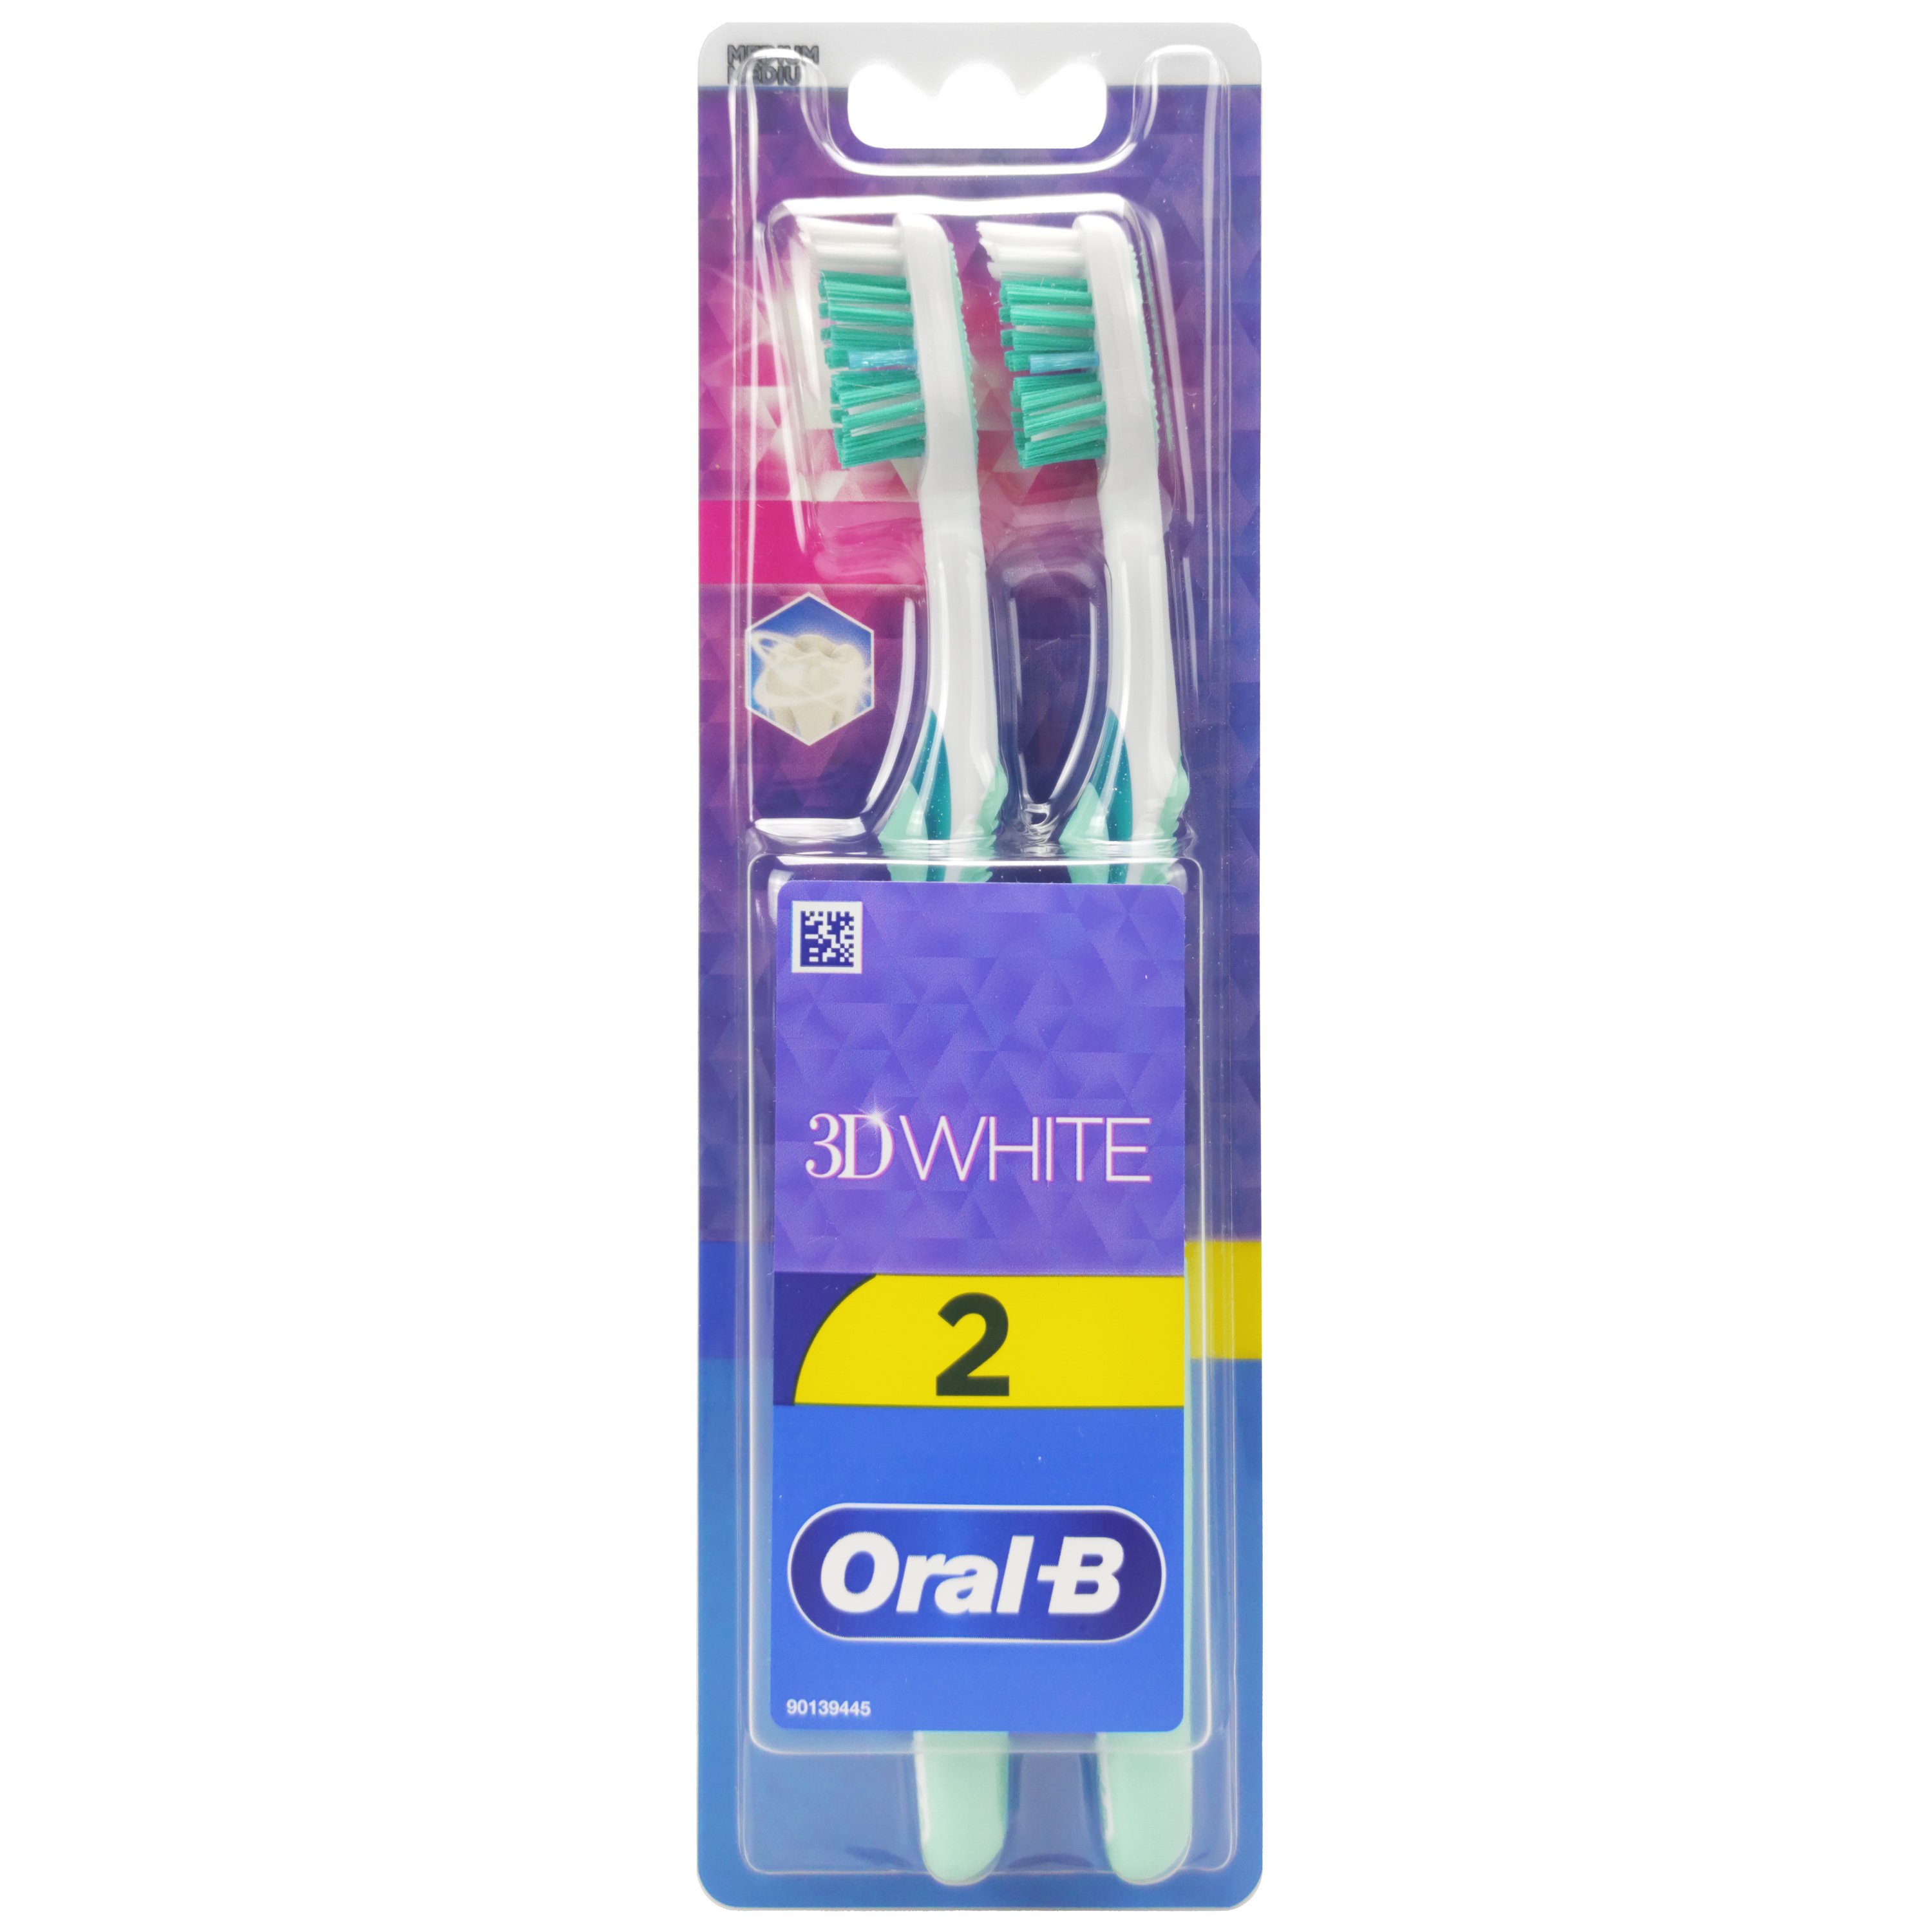 Oral-B 3D White Duo Medium Toothbrush Μέτρια Χειροκίνητη Οδοντόβουρτσα για Ενήλικες 2 Τεμάχια – Τιρκουάζ / Τιρκουάζ